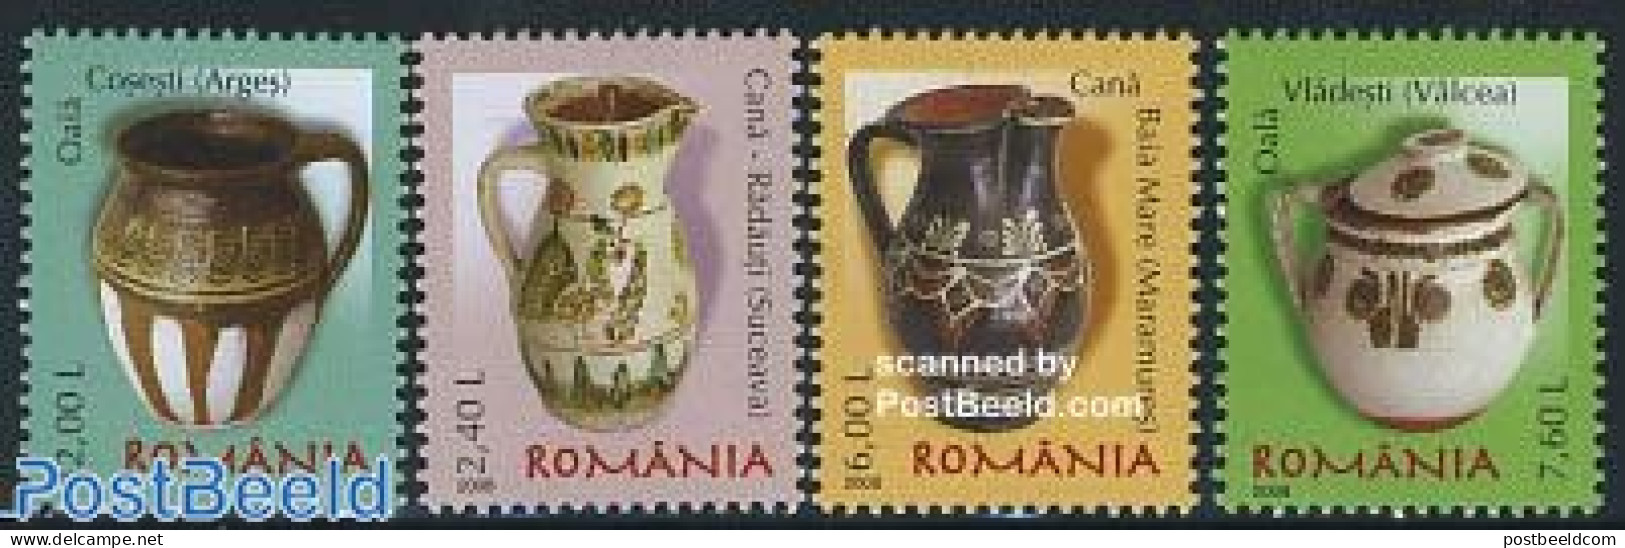 Romania 2008 Definitives, Ceramics 4v (2.00,2.40,6.00,7.60), Mint NH, Art - Art & Antique Objects - Ceramics - Ungebraucht